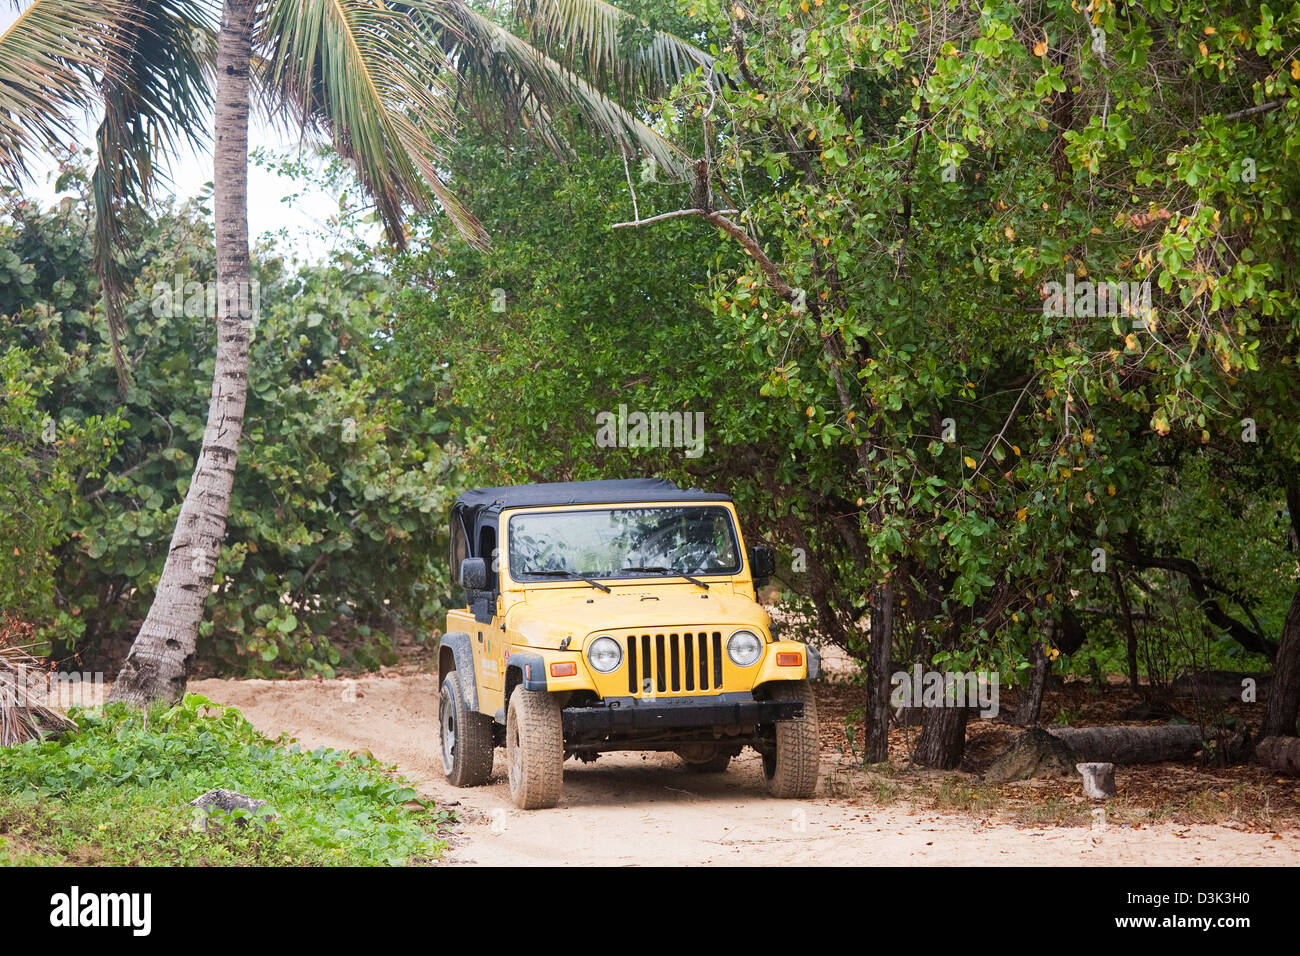 america, caribbean sea, hispaniola island, dominican republic, area of punta cana, beach, off-road car Stock Photo